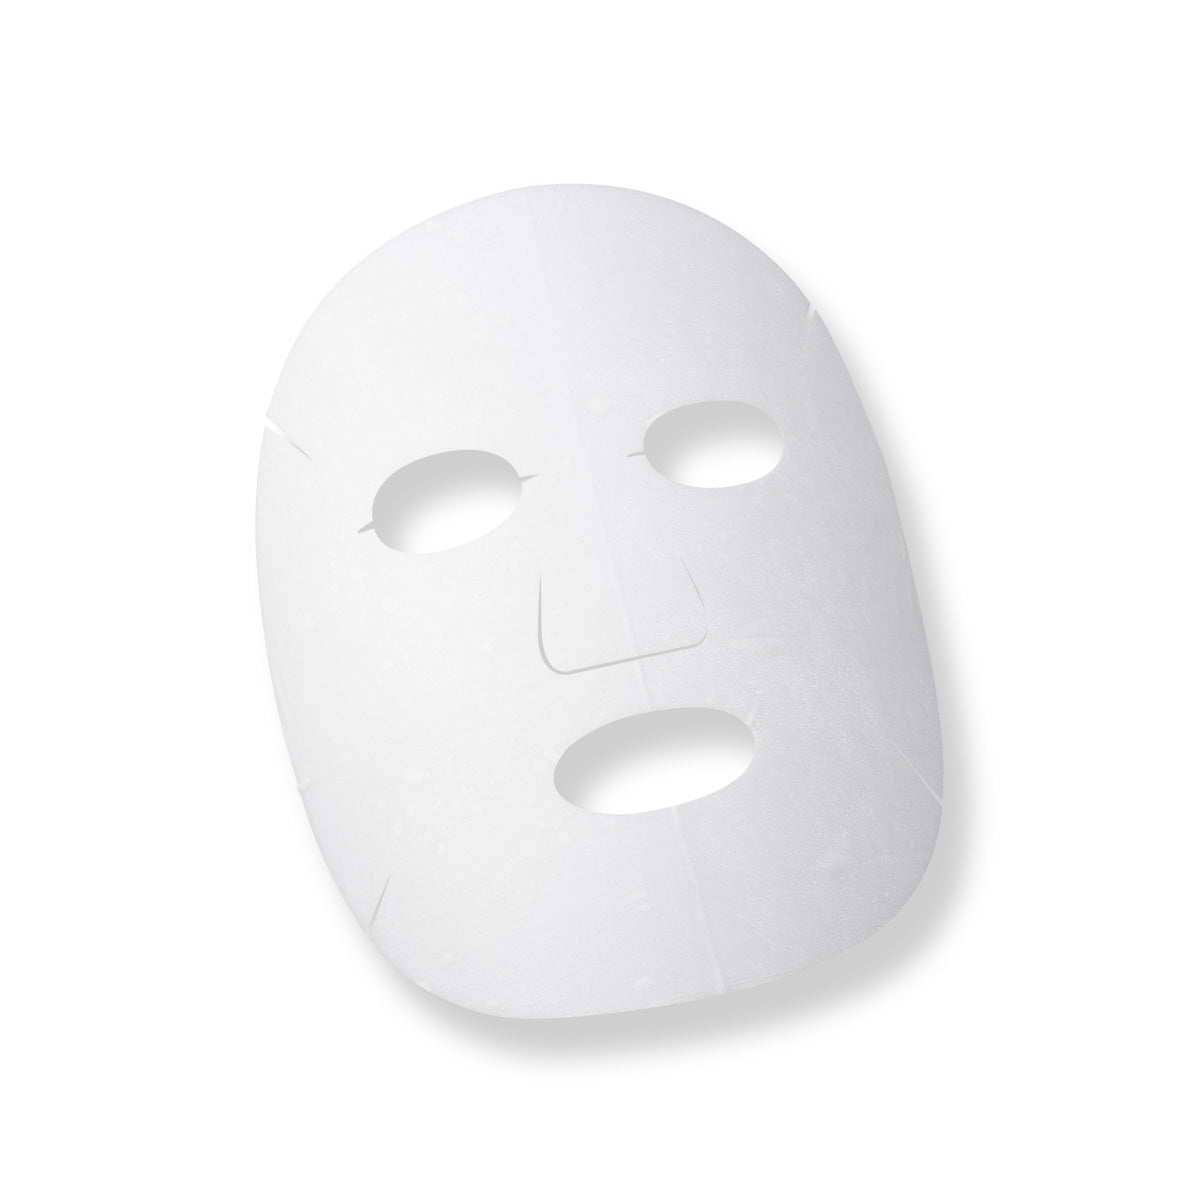 E-SPECIAL Beauty White Mask [20 mL x 10 sheets]